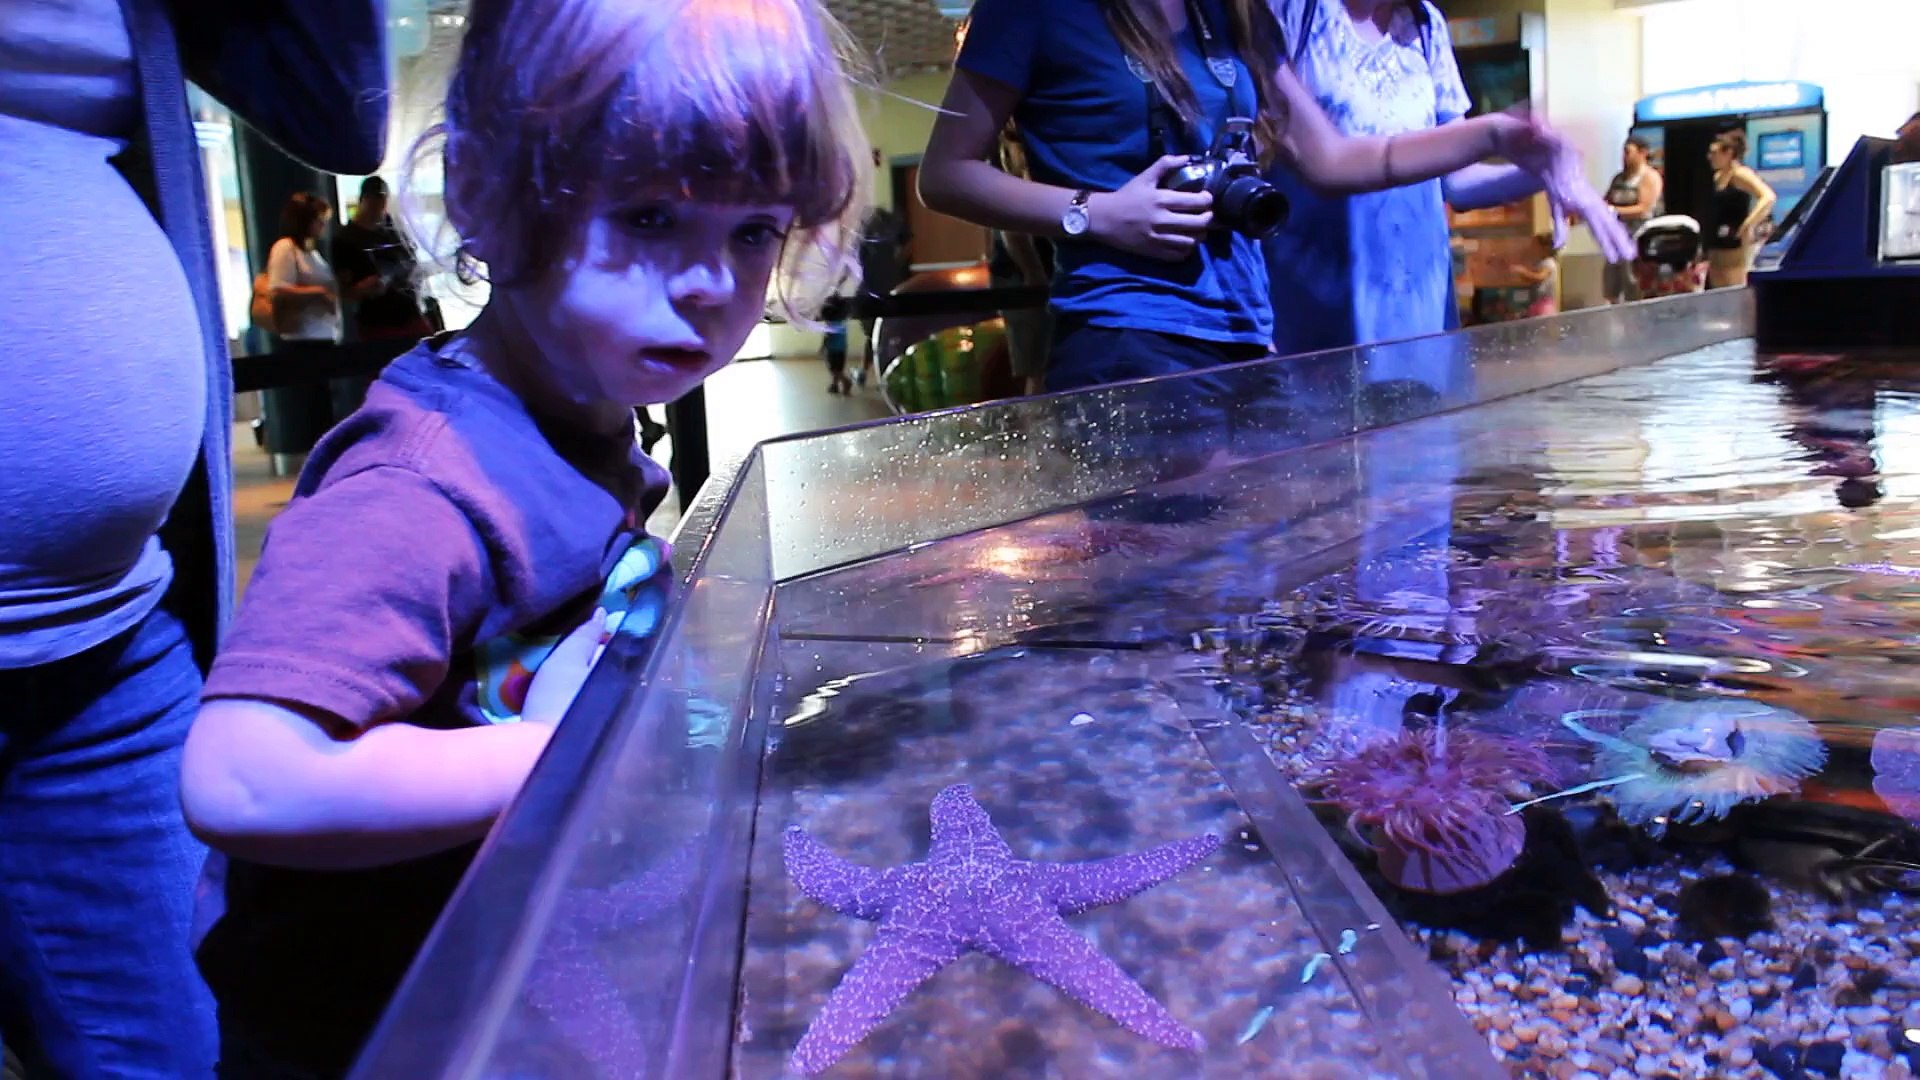 Tampa Aquarium with James and Nicole May 2015 Seahorses